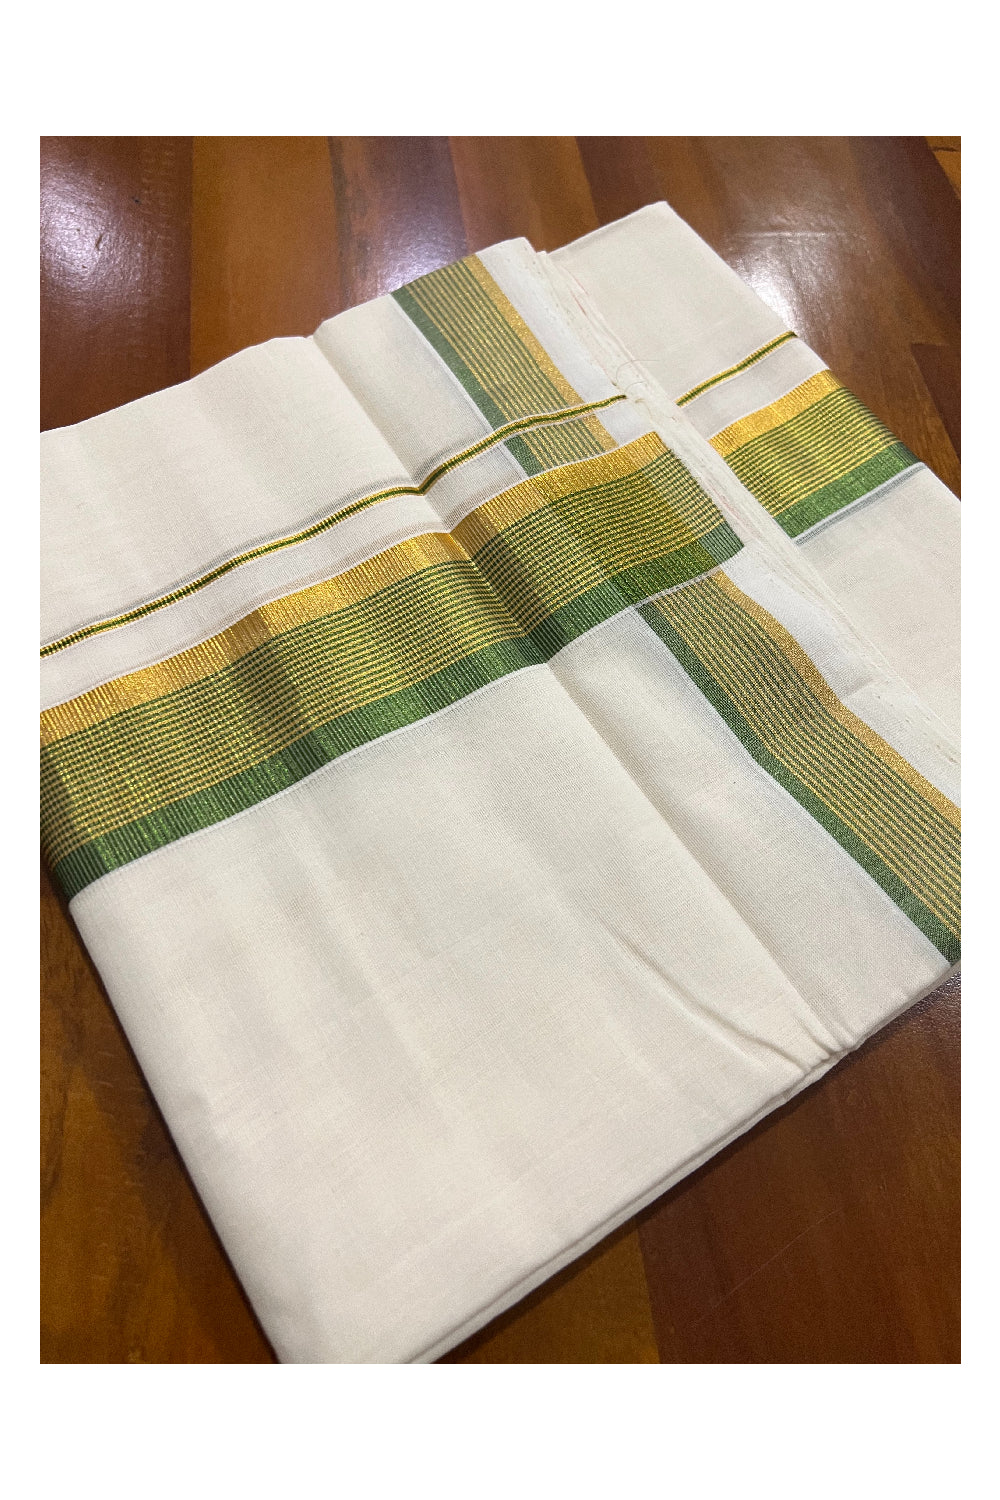 Southloom Kuthampully Handloom Pure Cotton Mundu with Golden and Light Green Kasavu Border (South Indian Dhoti)